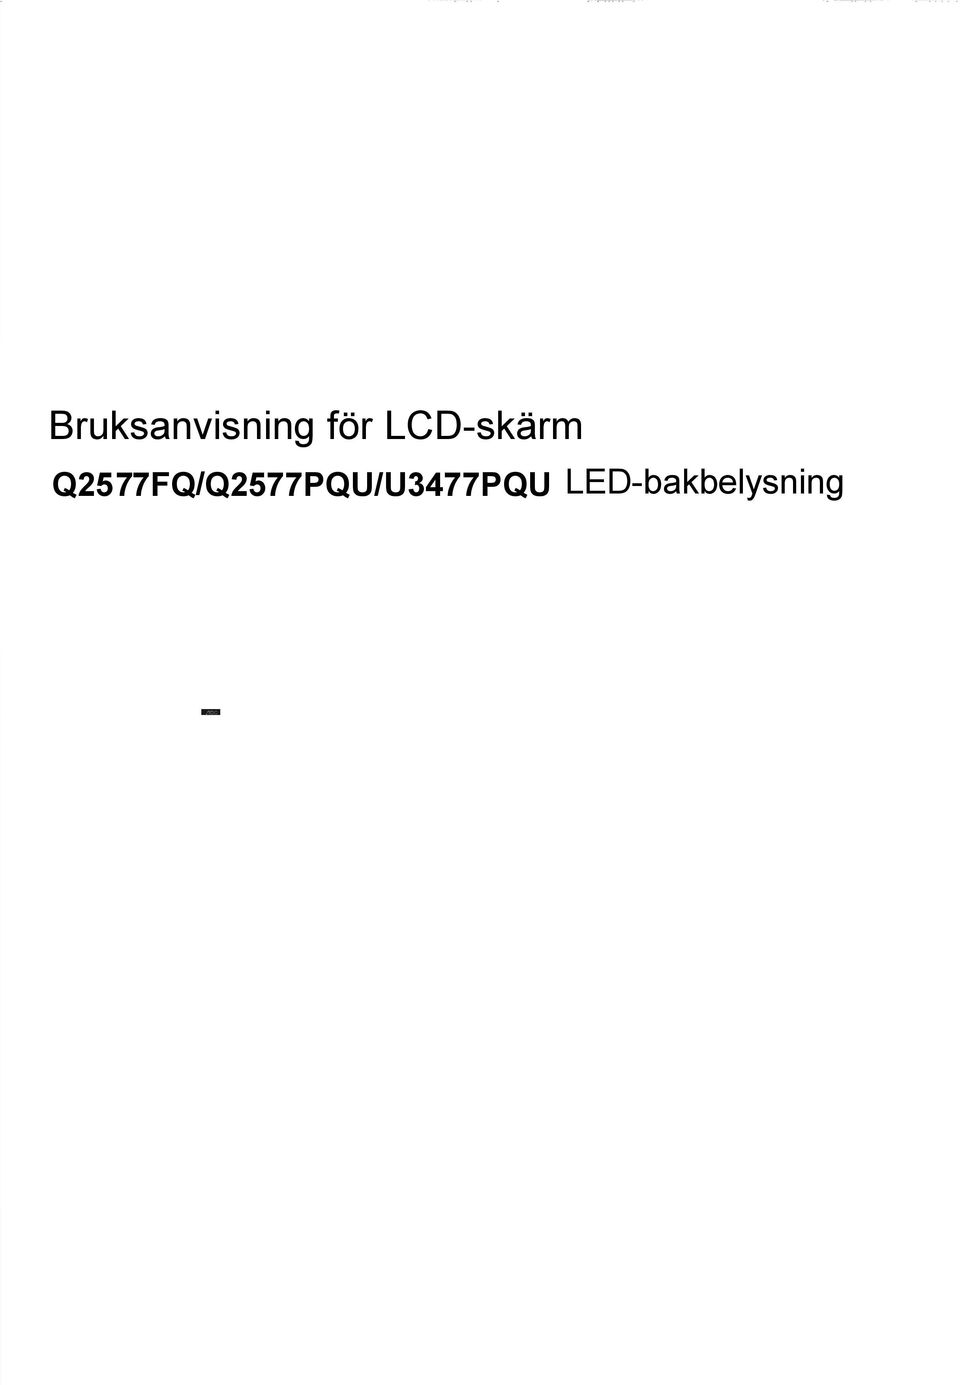 LED-bakbelysning www.aoc.